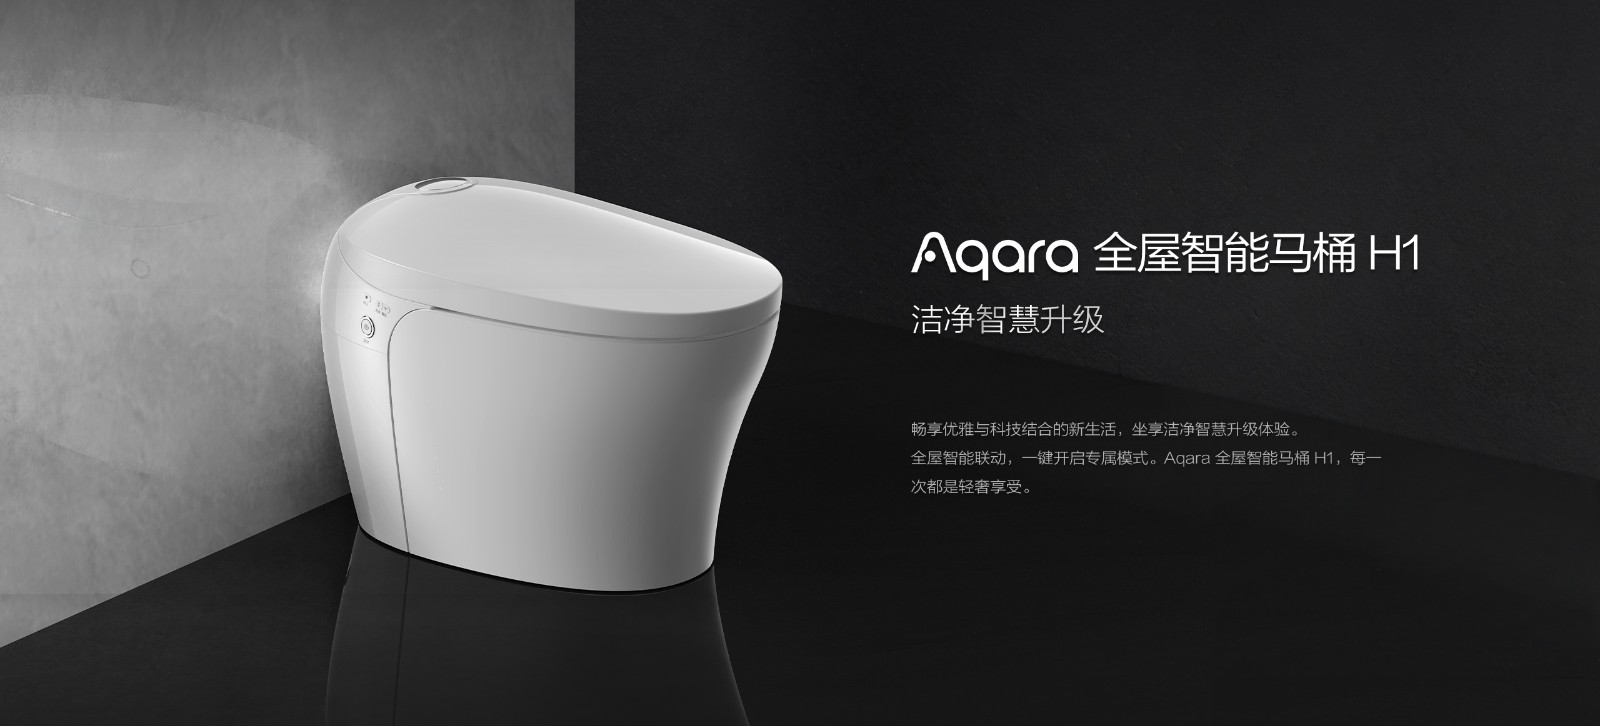 Smart-Toilet-H1-PC_01.jpg